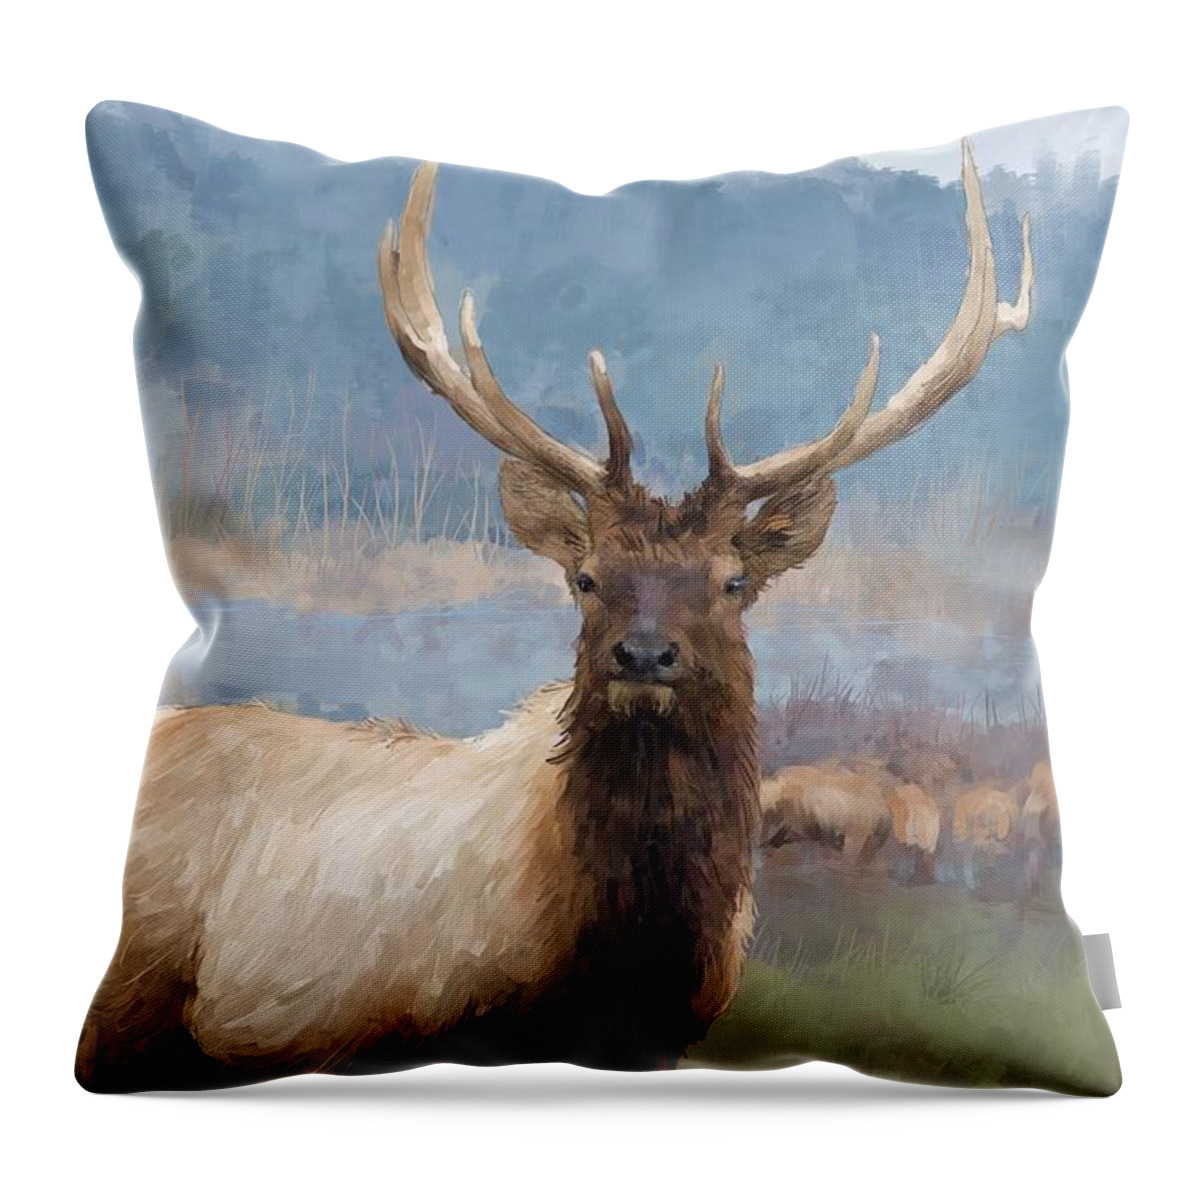 Animal Throw Pillow featuring the digital art Bull elk by the river by Debra Baldwin